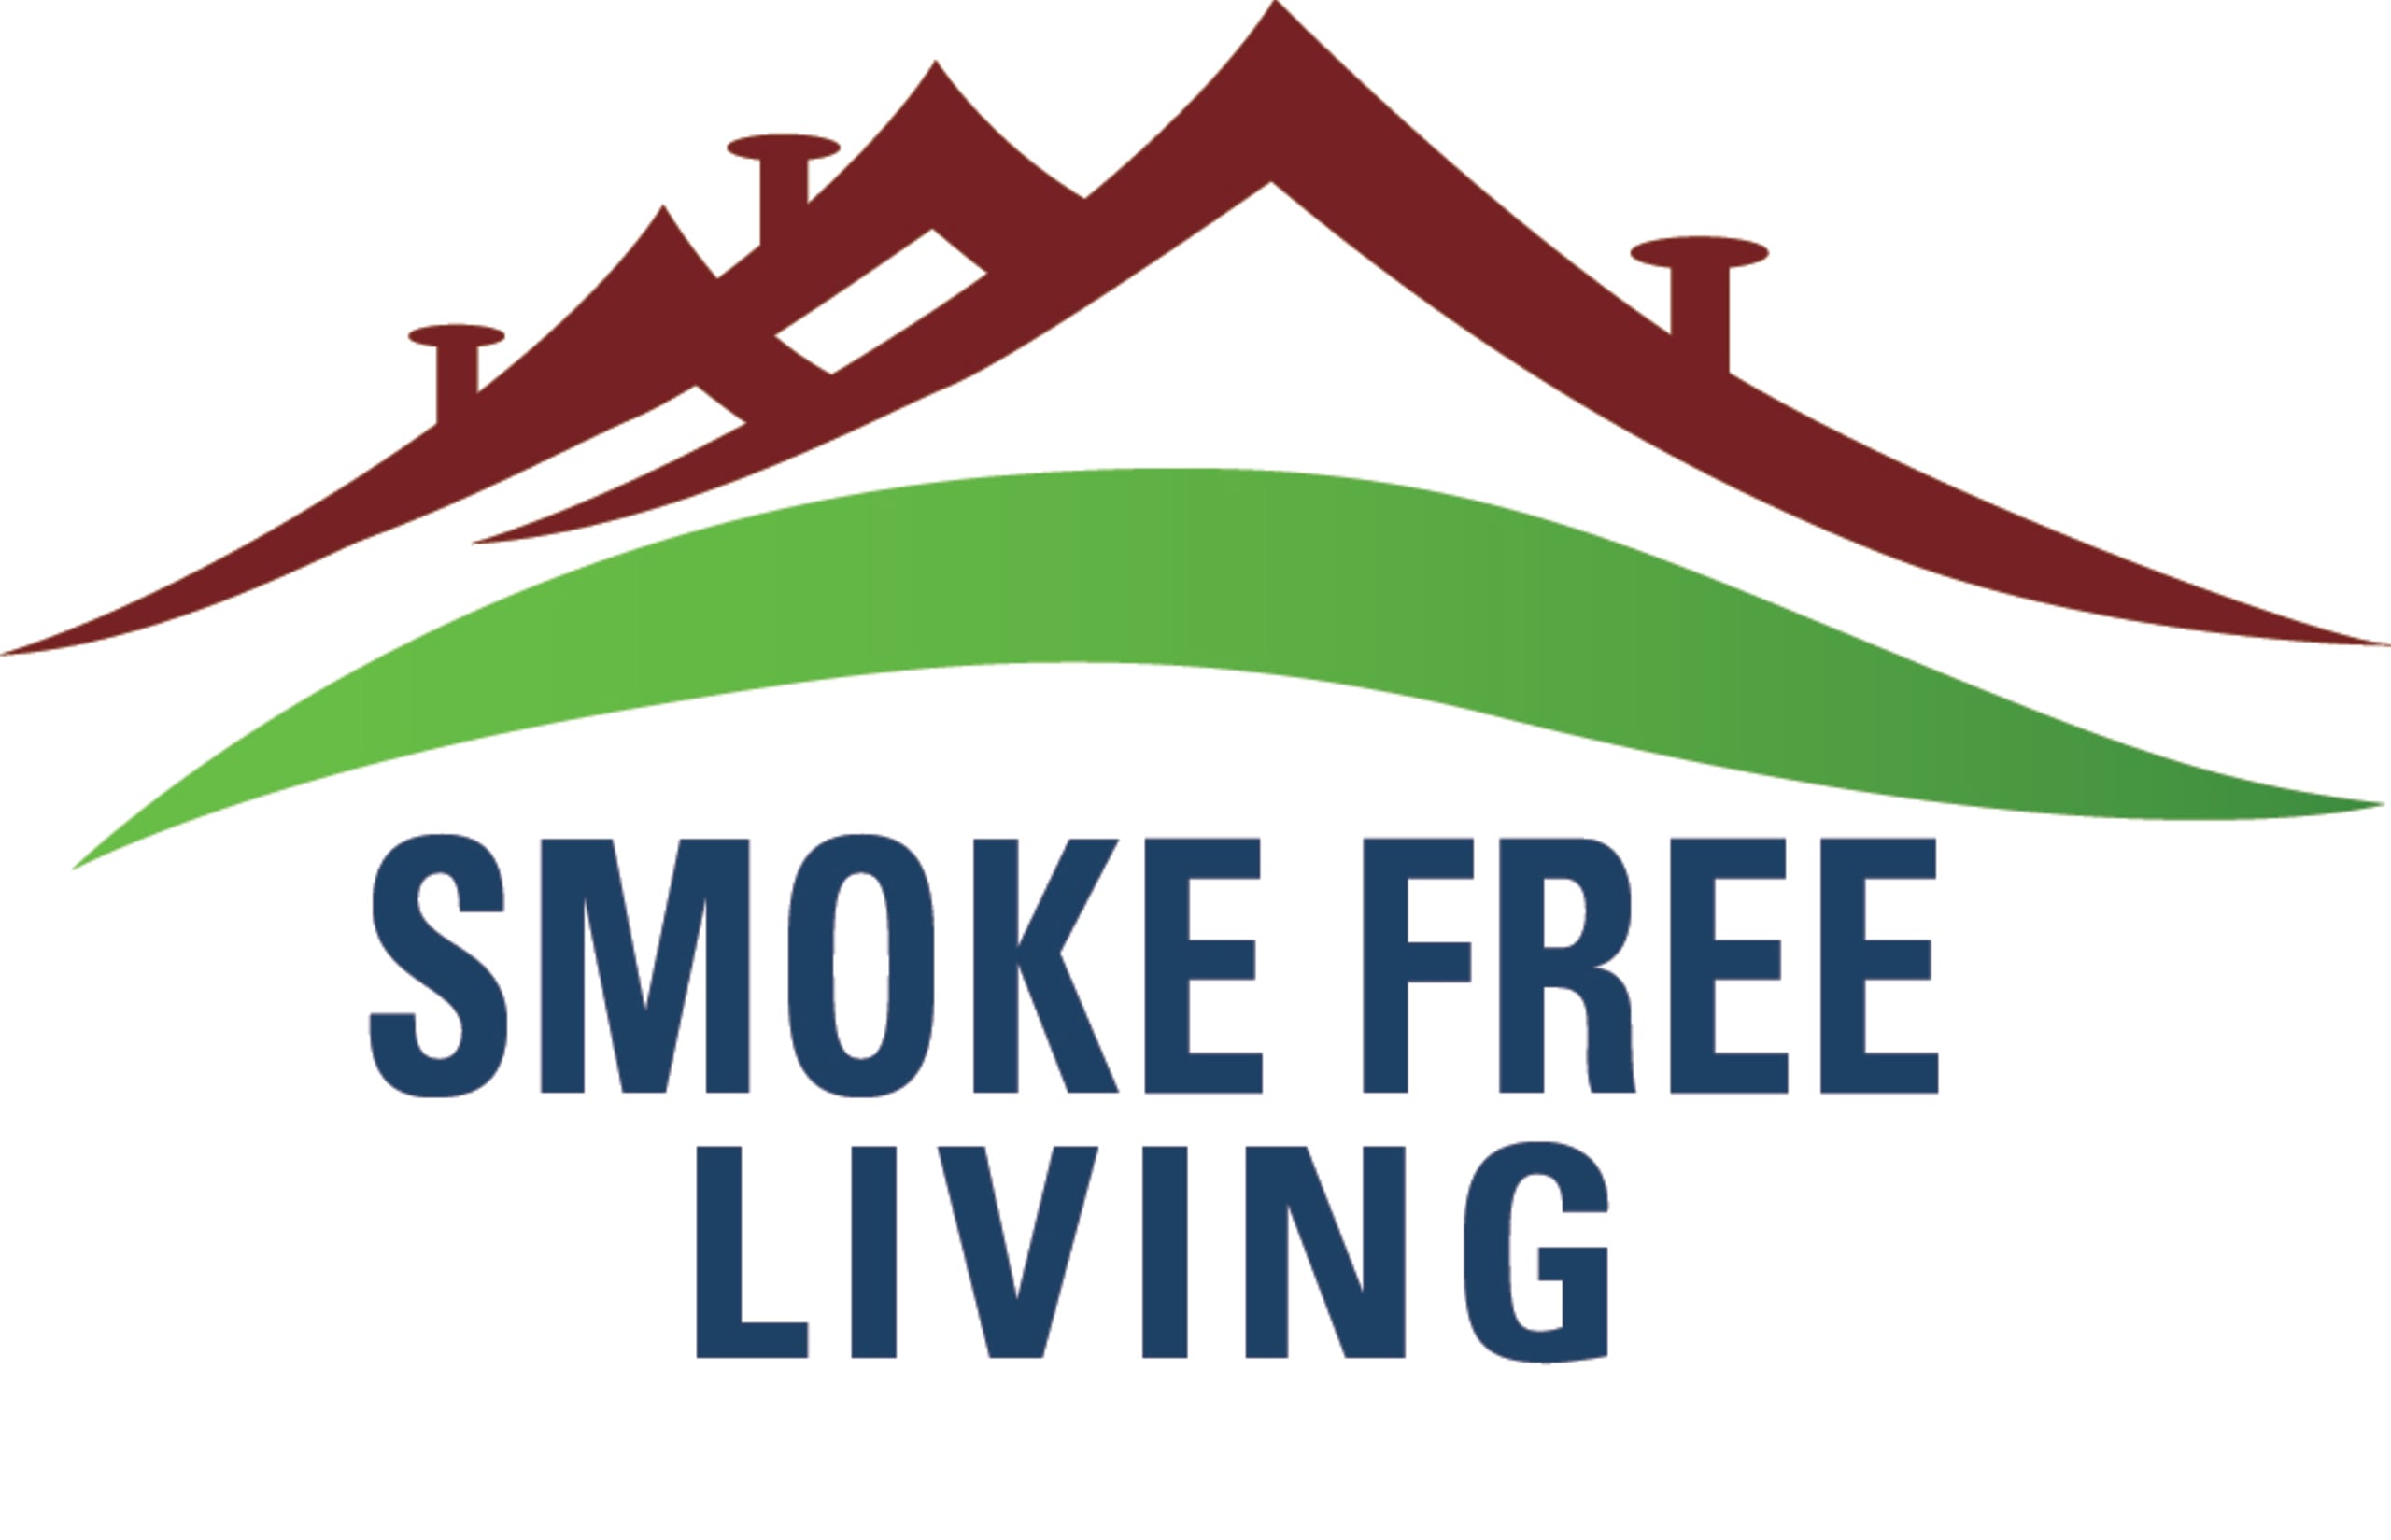 Smoke free living